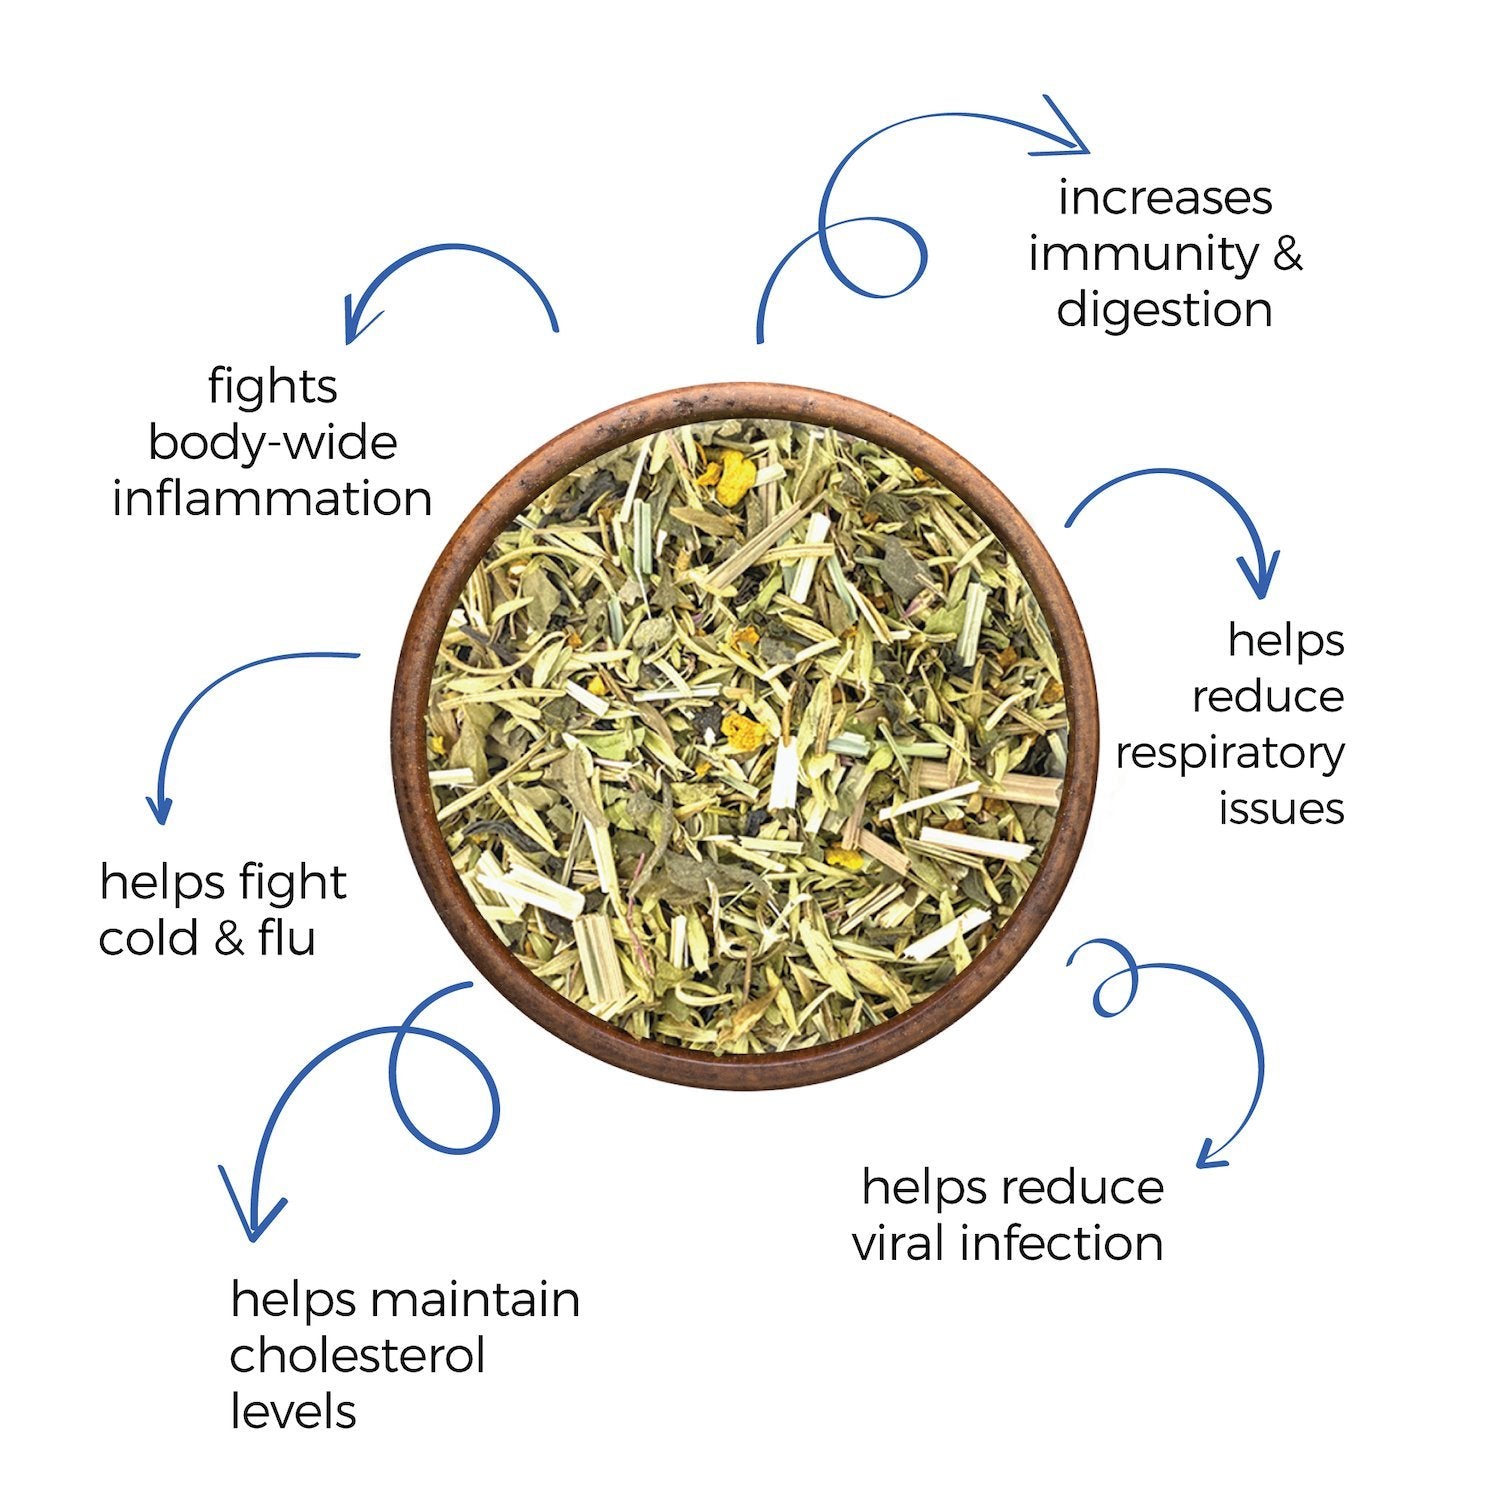 All Day Immunity Elixir Green Tea ( 20 Tea Bags )-Dancing Leaf